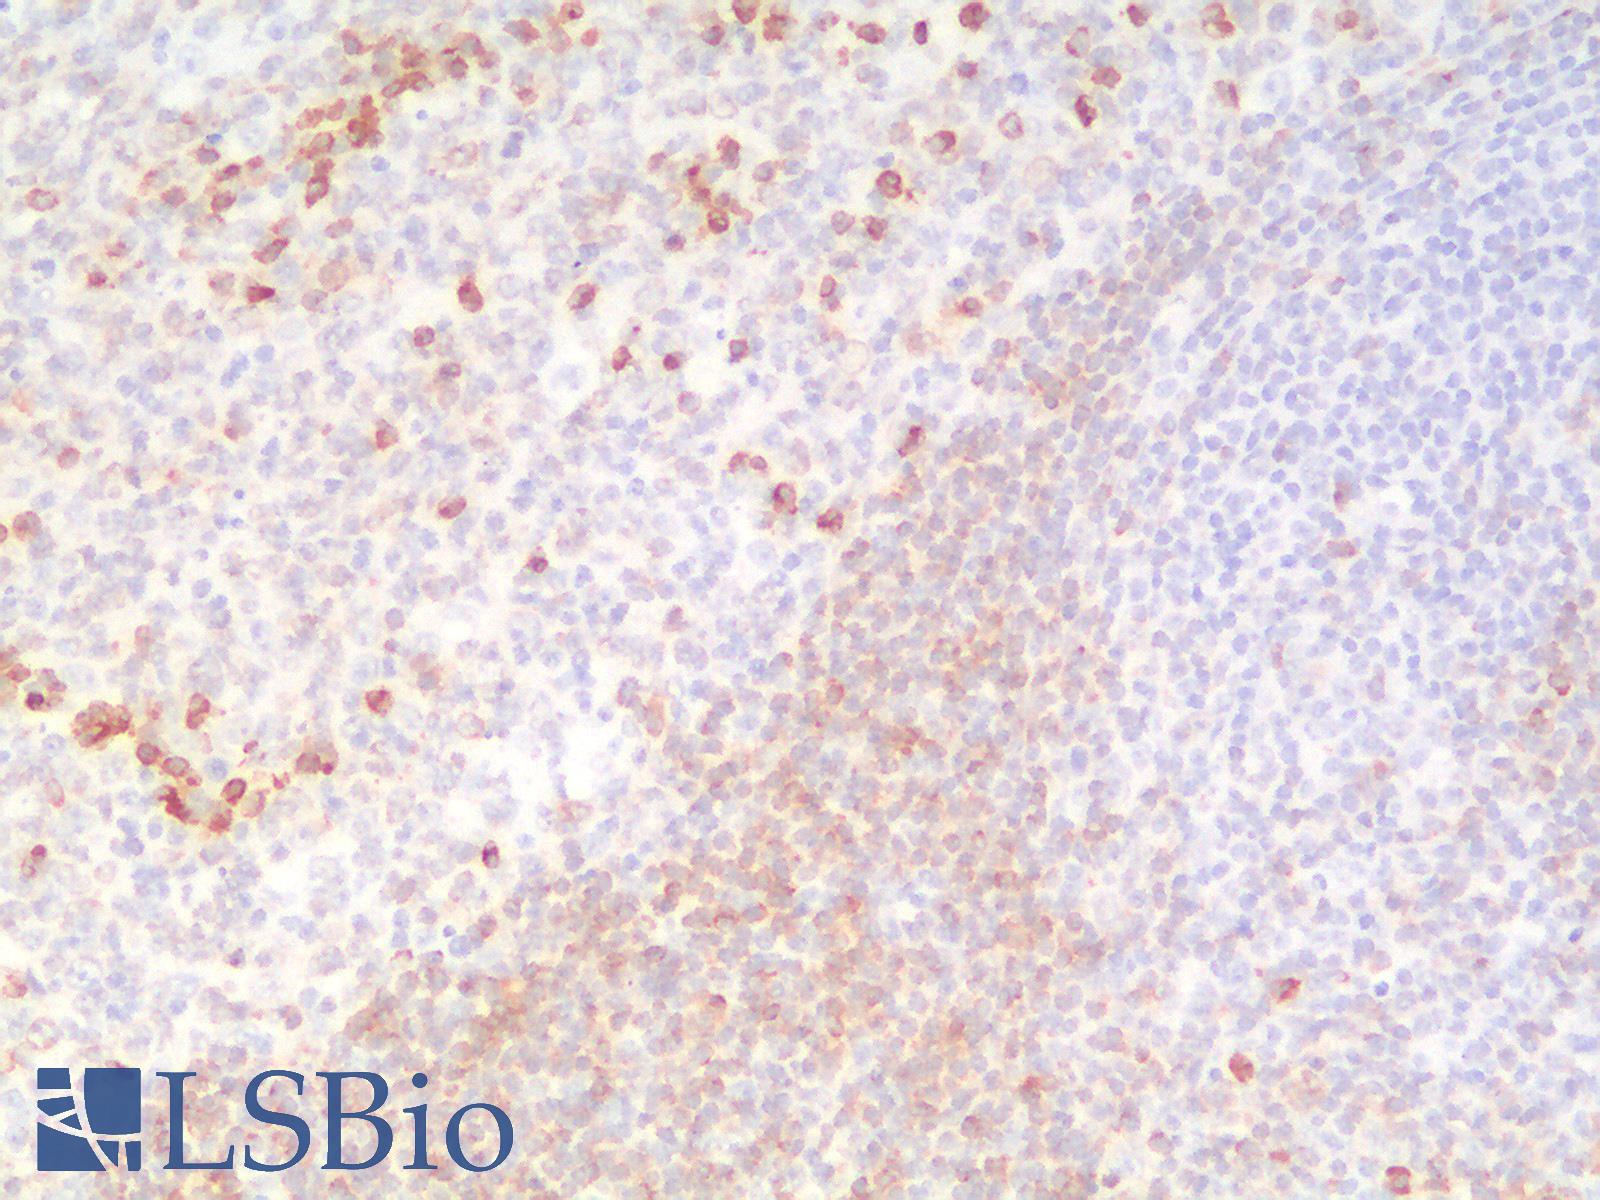 CD79A / CD79 Alpha Antibody - Human Tonsil: Formalin-Fixed, Paraffin-Embedded (FFPE)